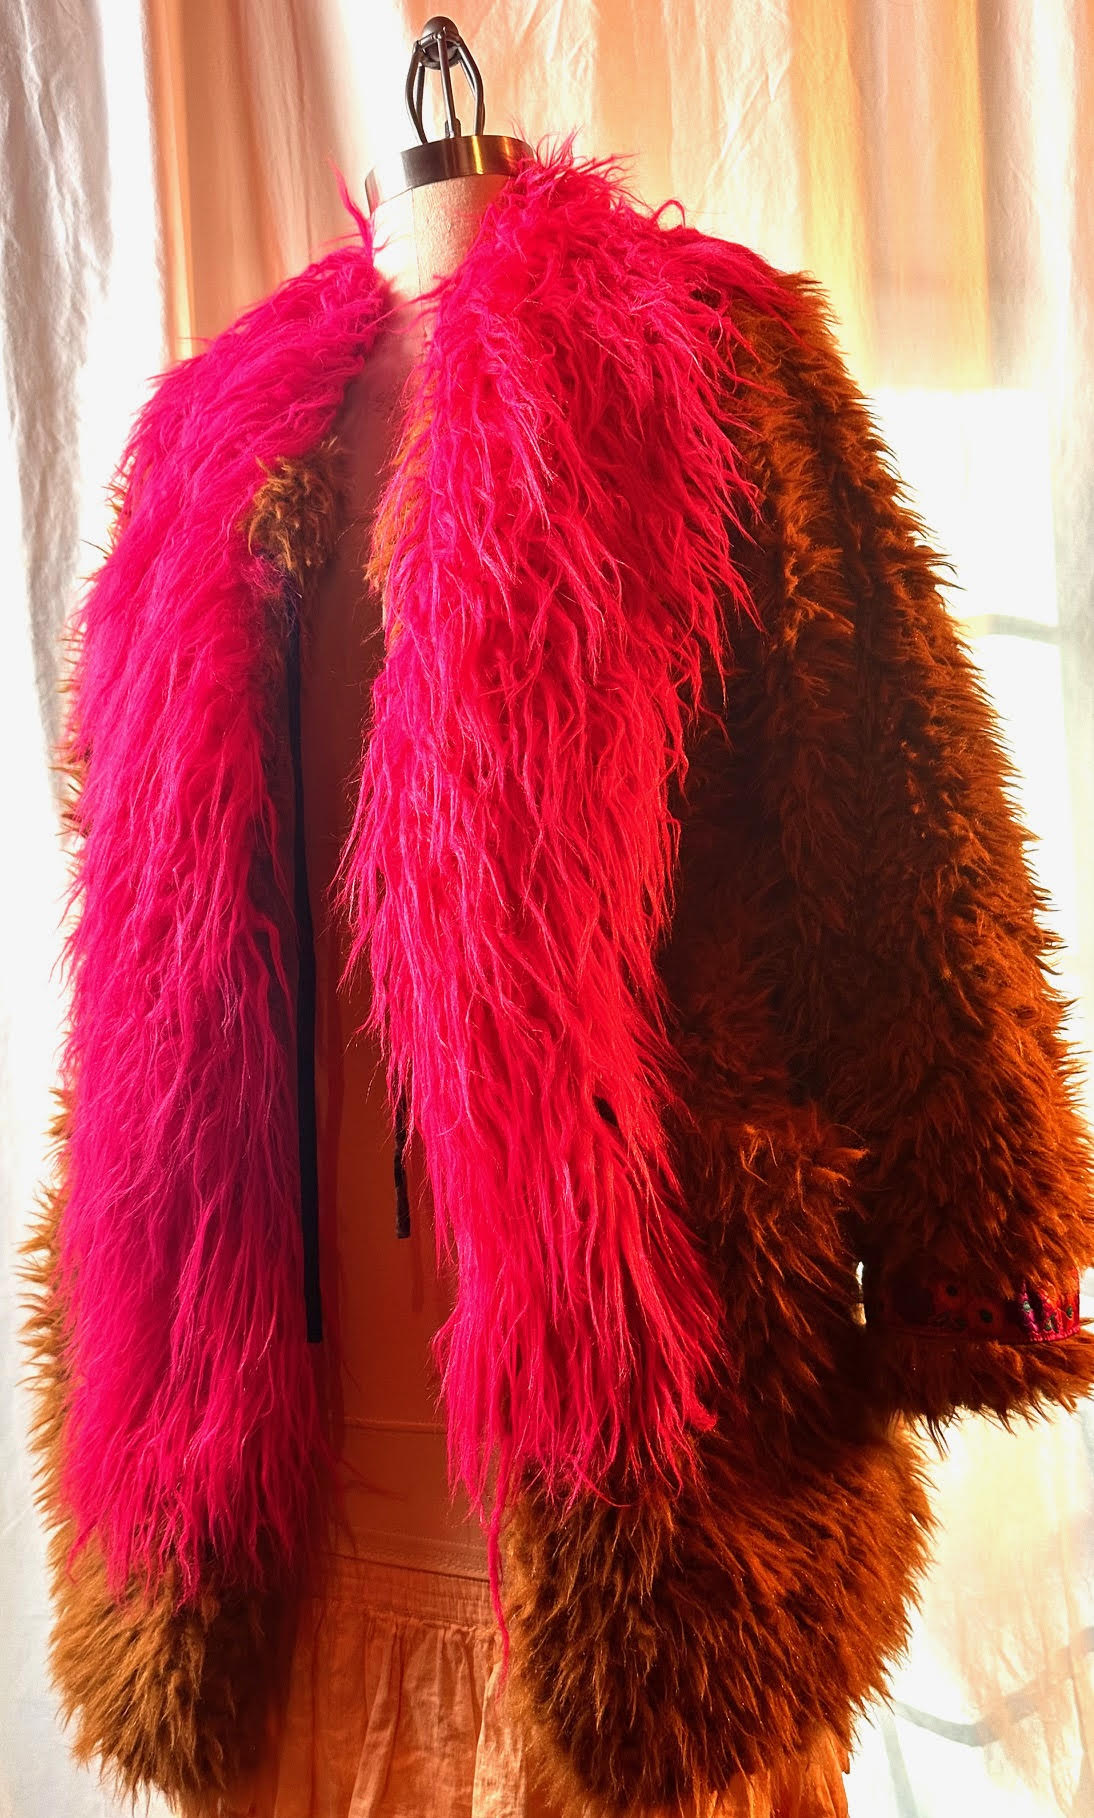 Warm Fuzzy Tan-Colored Coat